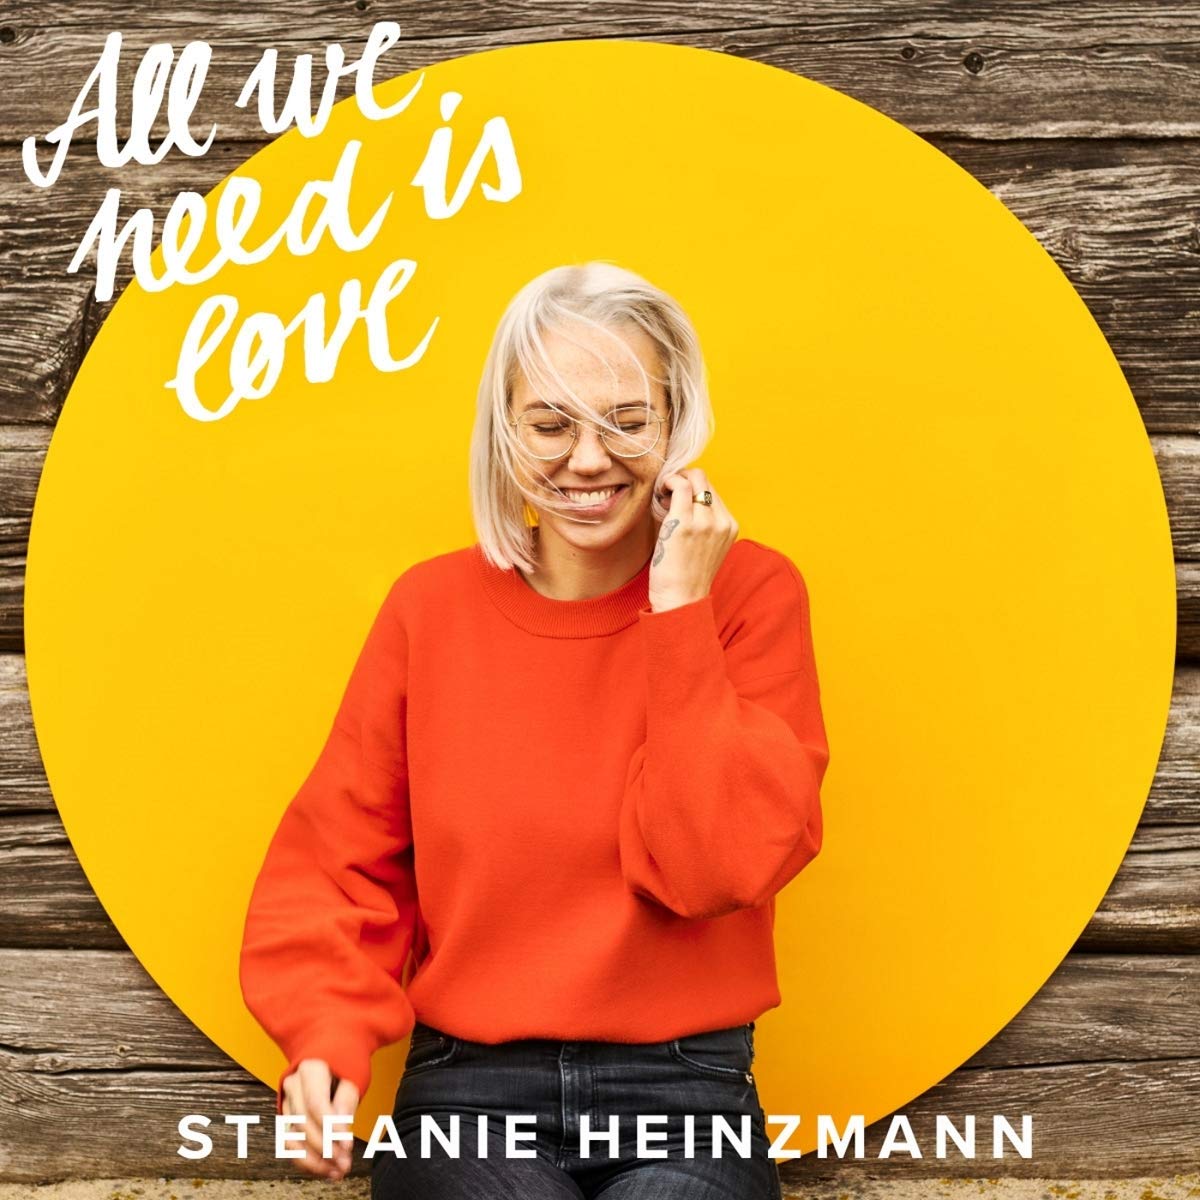 Stefanie Heinzmann - All We Need Is Love (Album Cover)